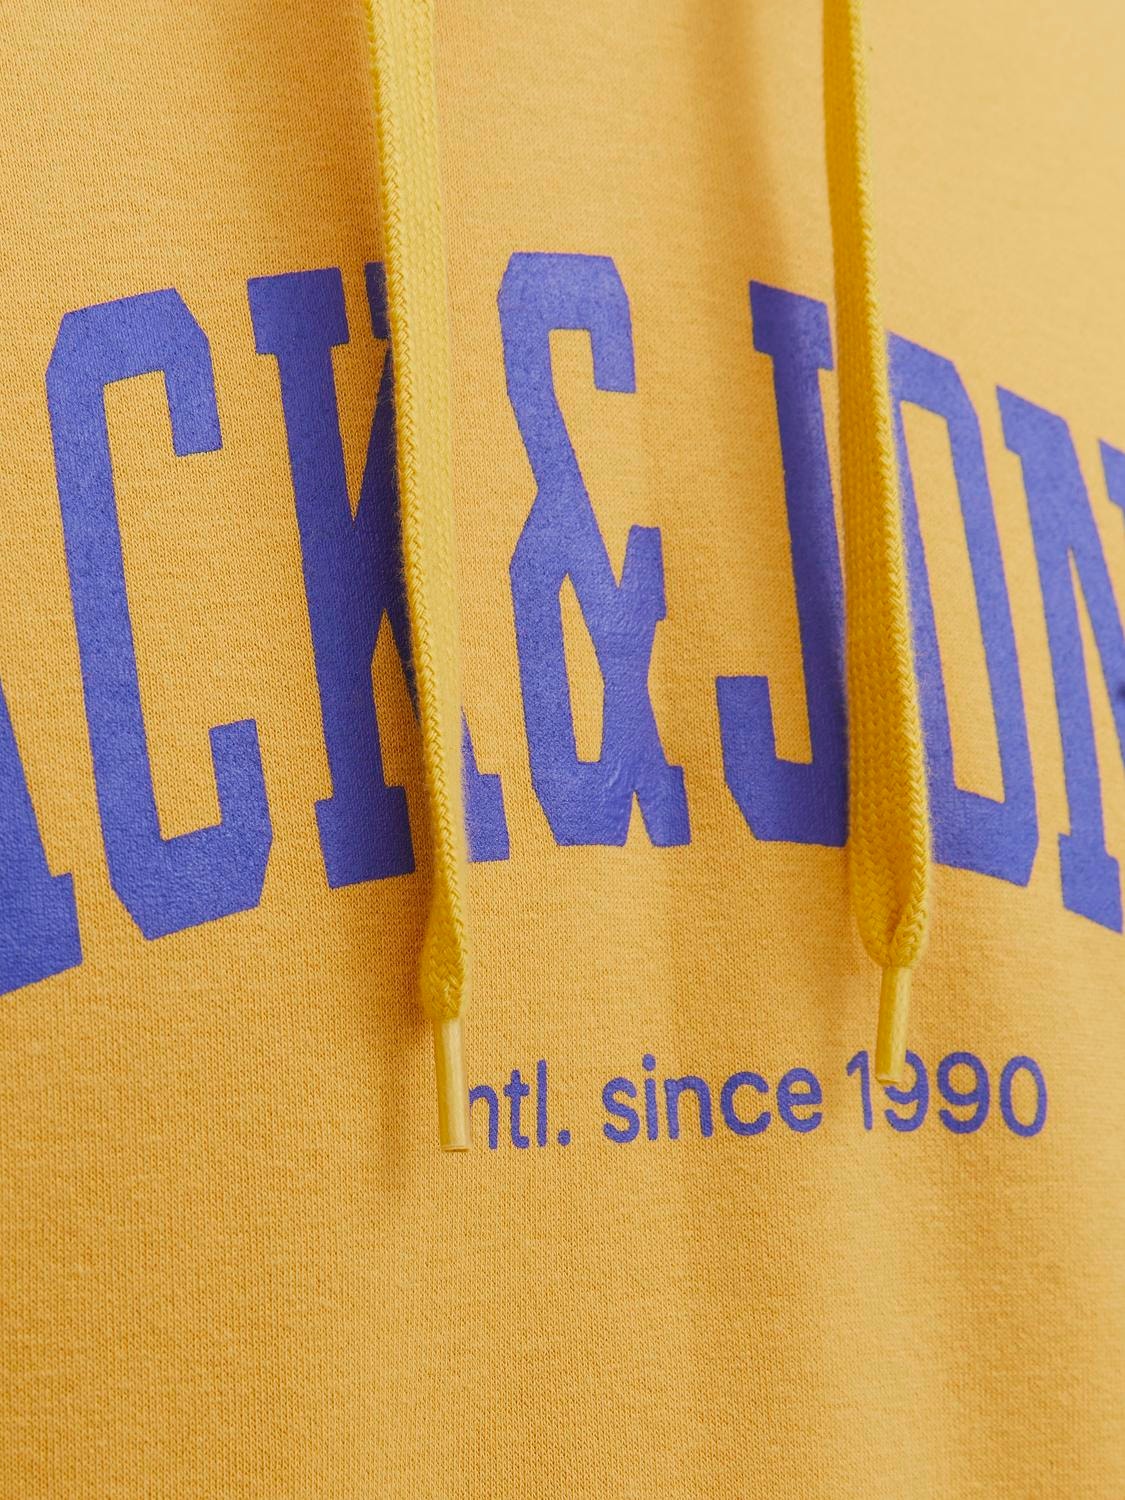 Jack & Jones Logo Hoodie -Honey Gold - 12236513